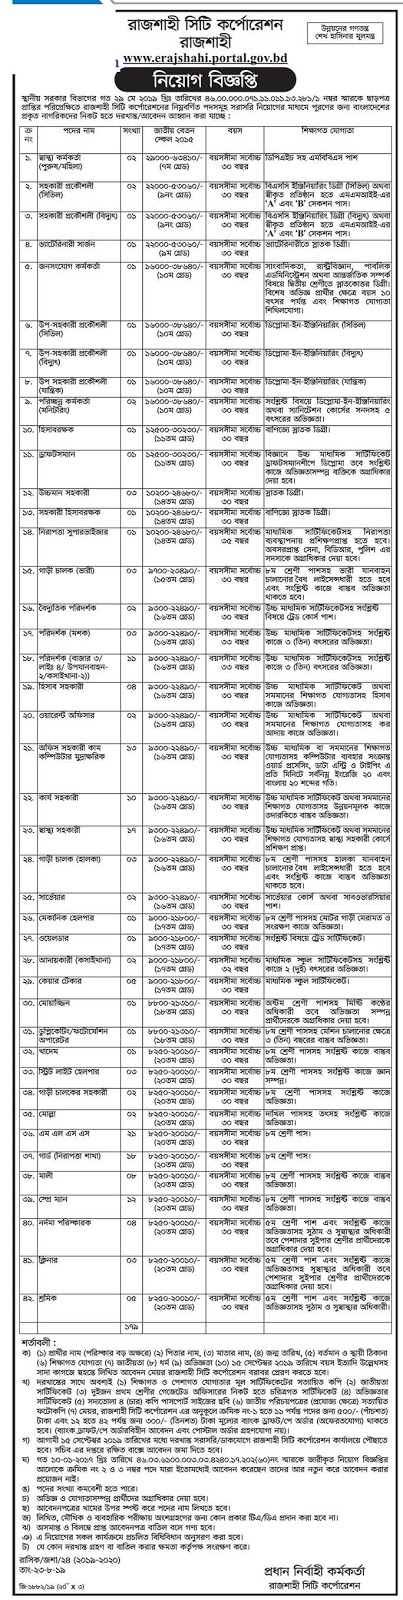 Rajshahi City Corporation Job circular 2019